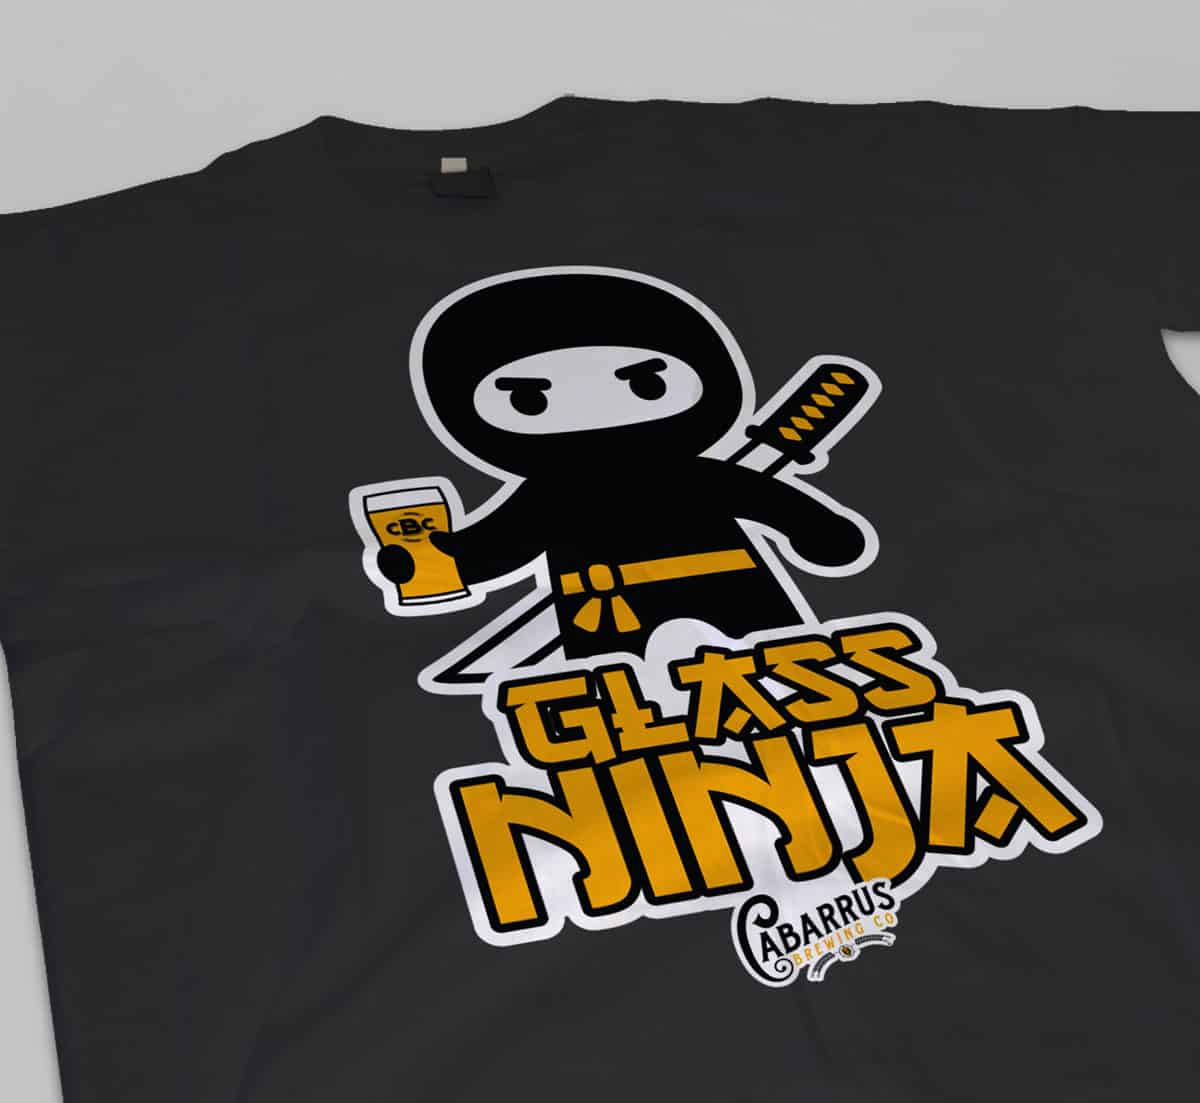 Cabarrus Brewing Co. Glass Ninja Shirt